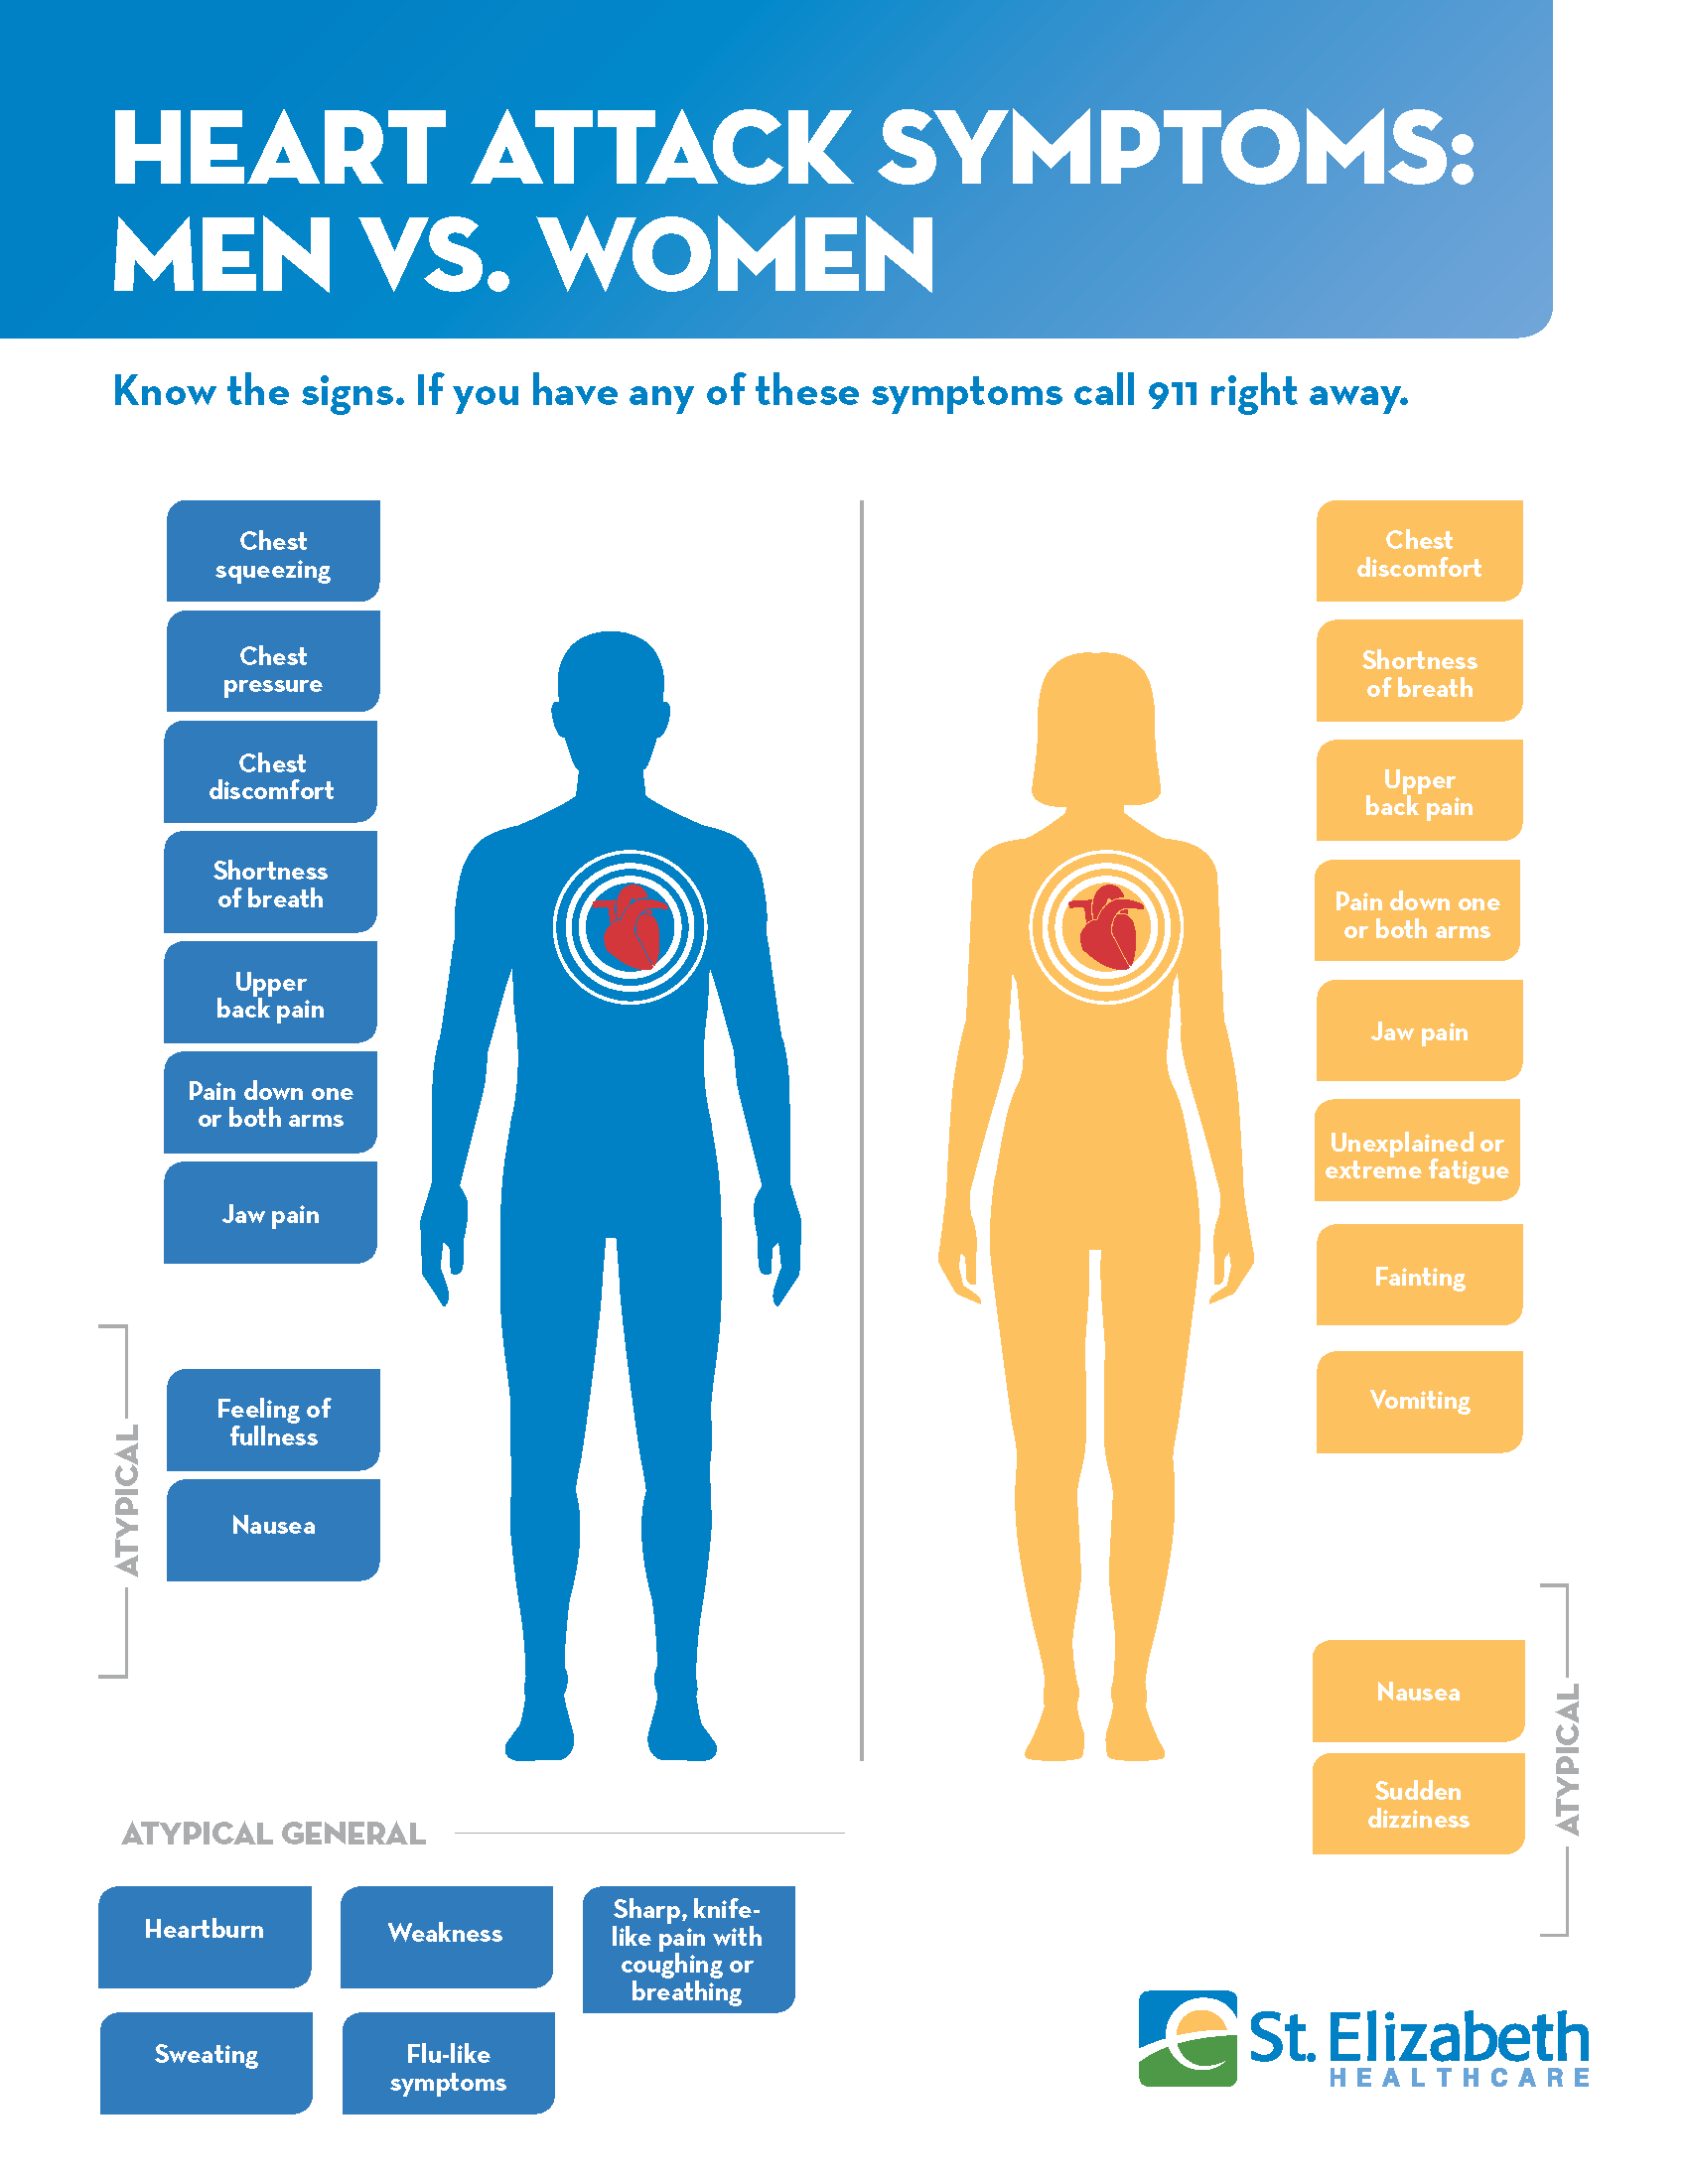 Heart Attack Symptoms: Men vs. Women